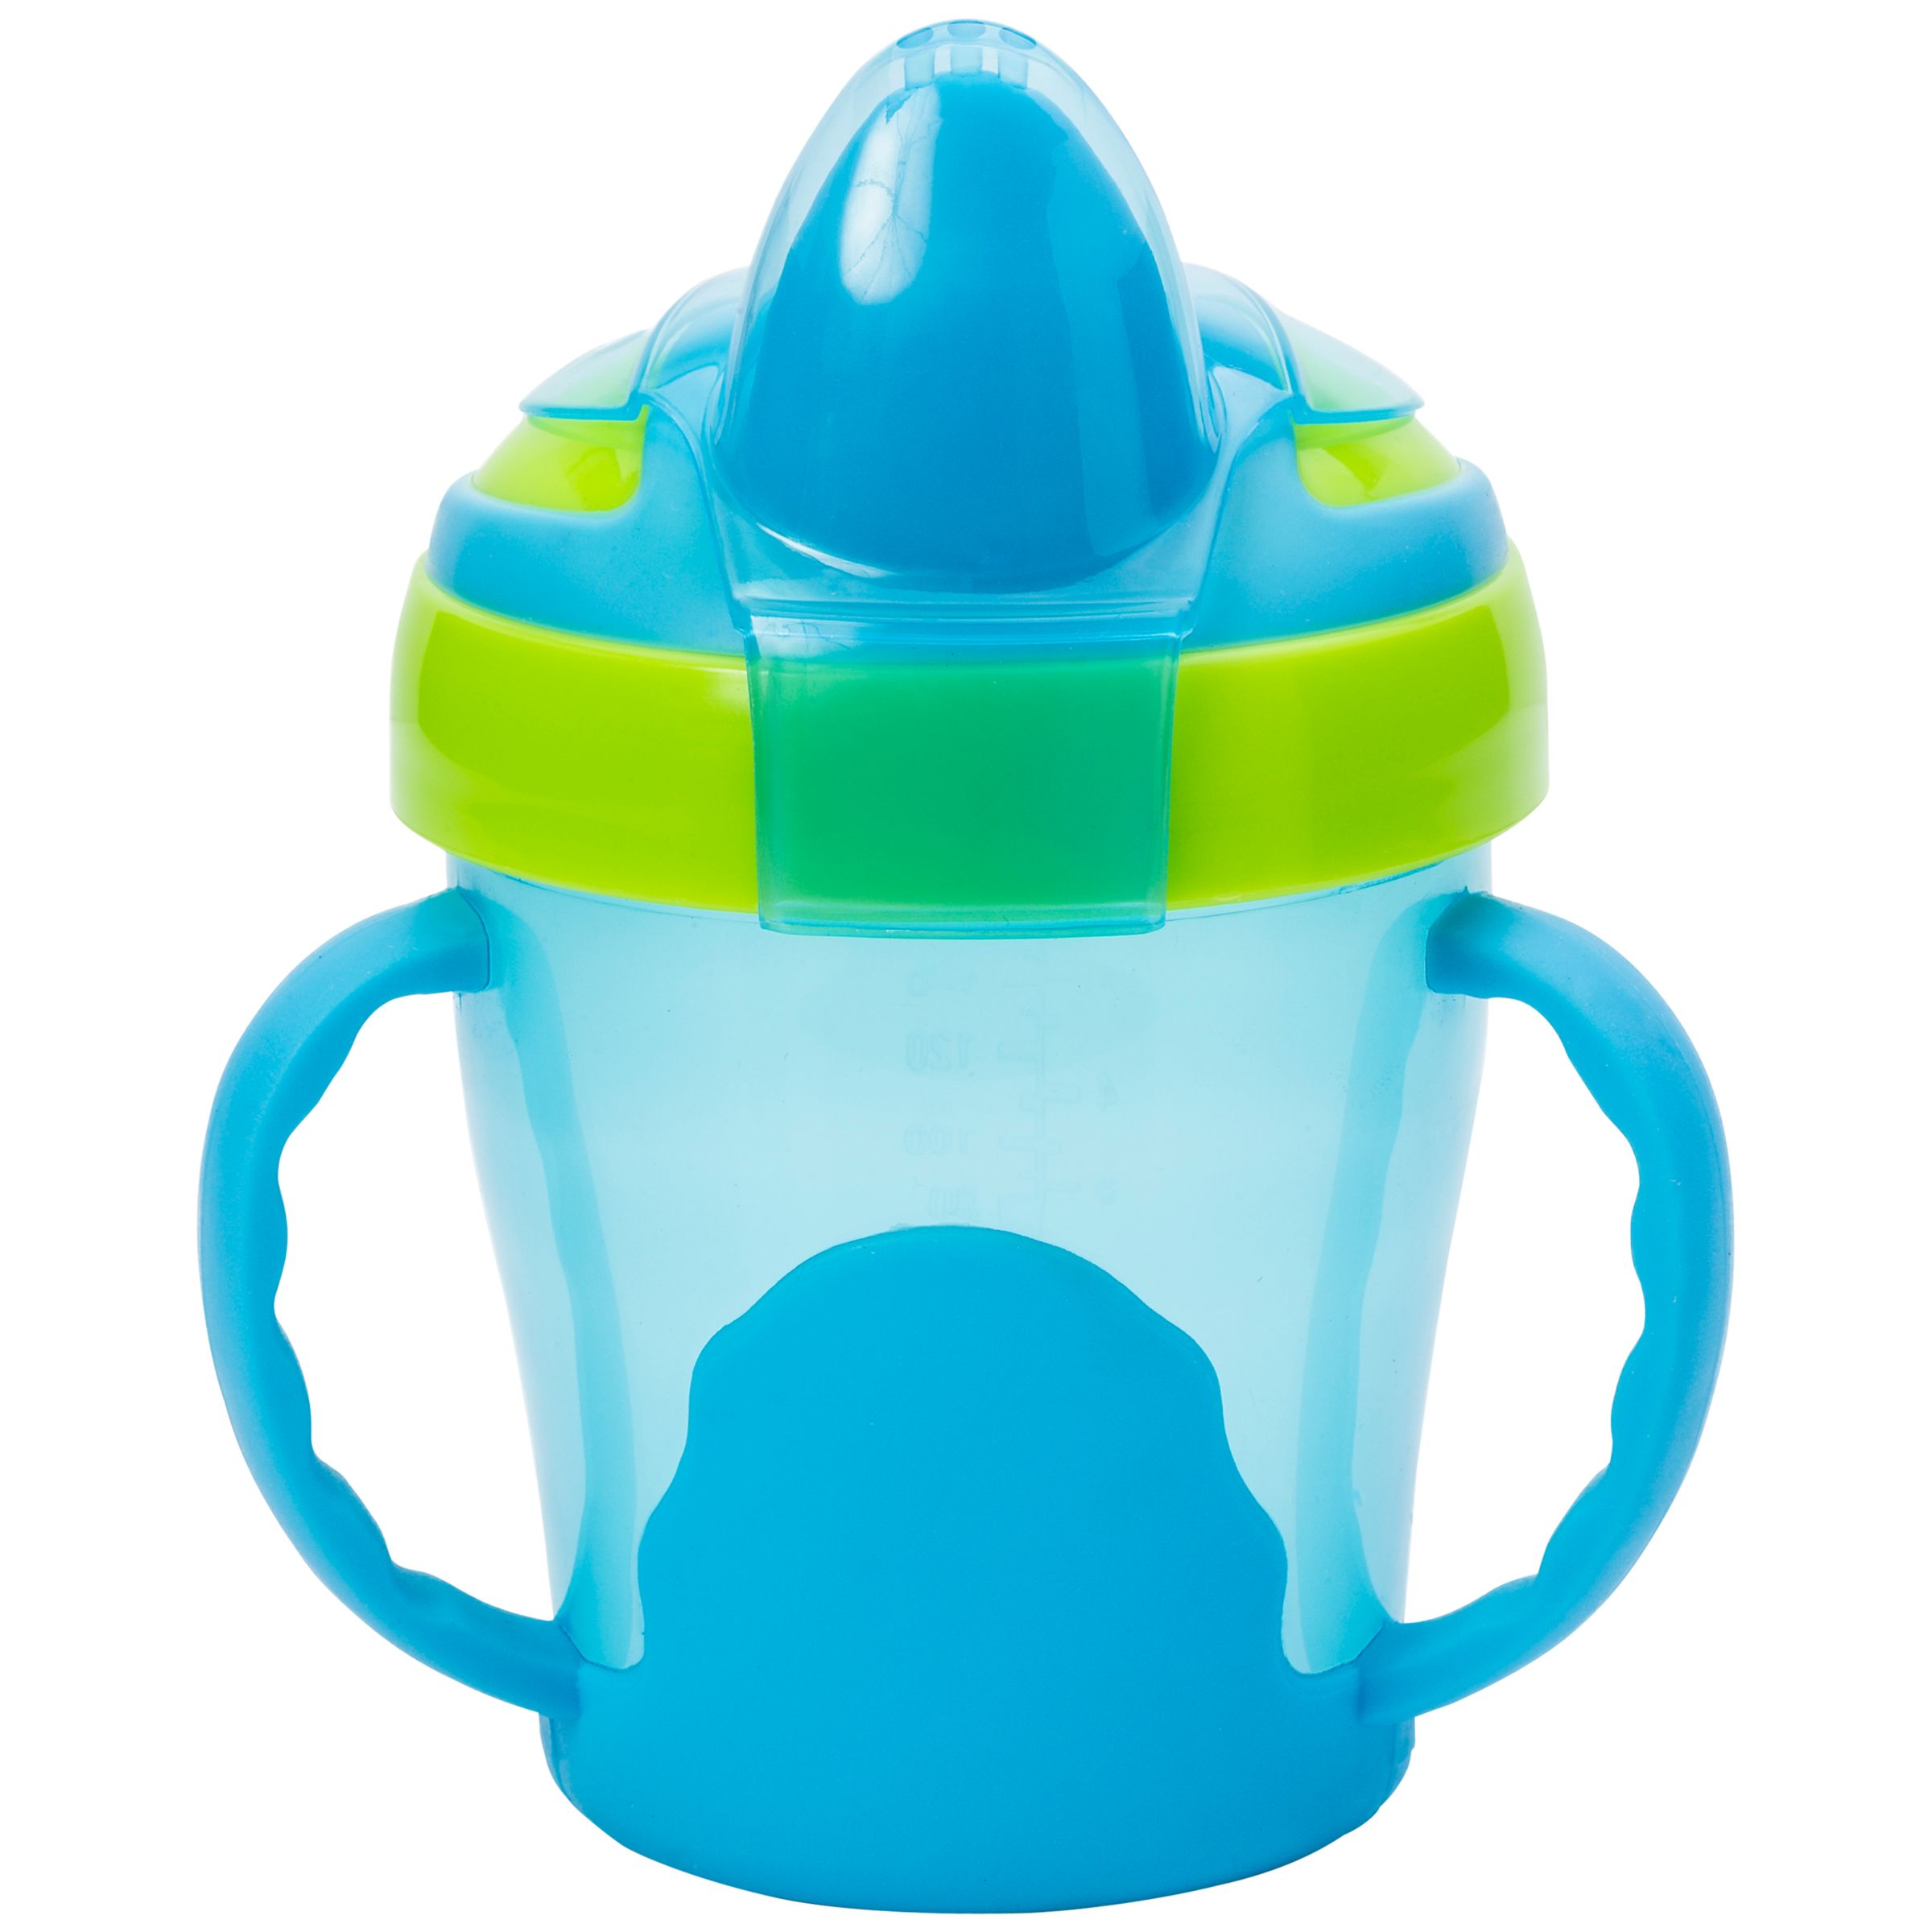 Toepassen spontaan Occlusie Vital Baby Trainer Cup With Handles